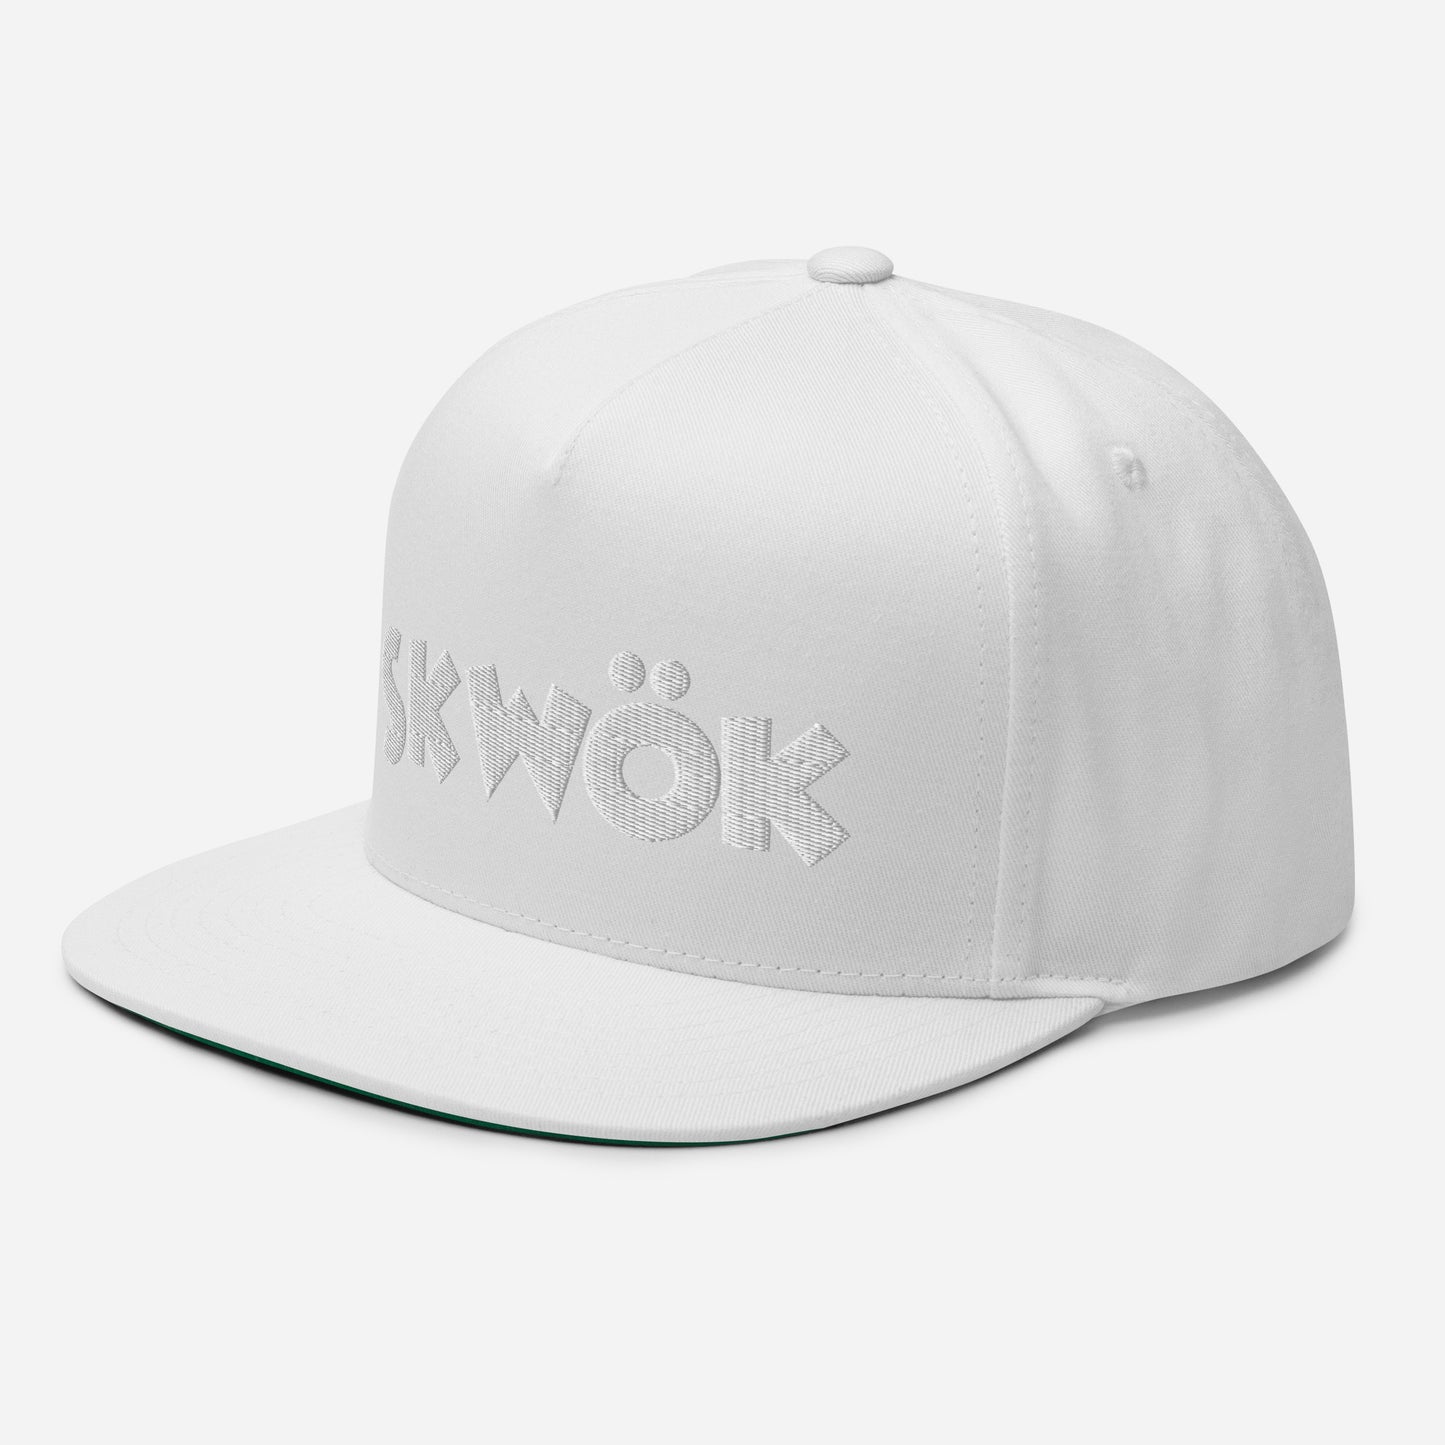 Skwok Brand / Hat / Flat Bill Cap / OG Logo / 3D Puff / Embroidered / White / 7 Color Options